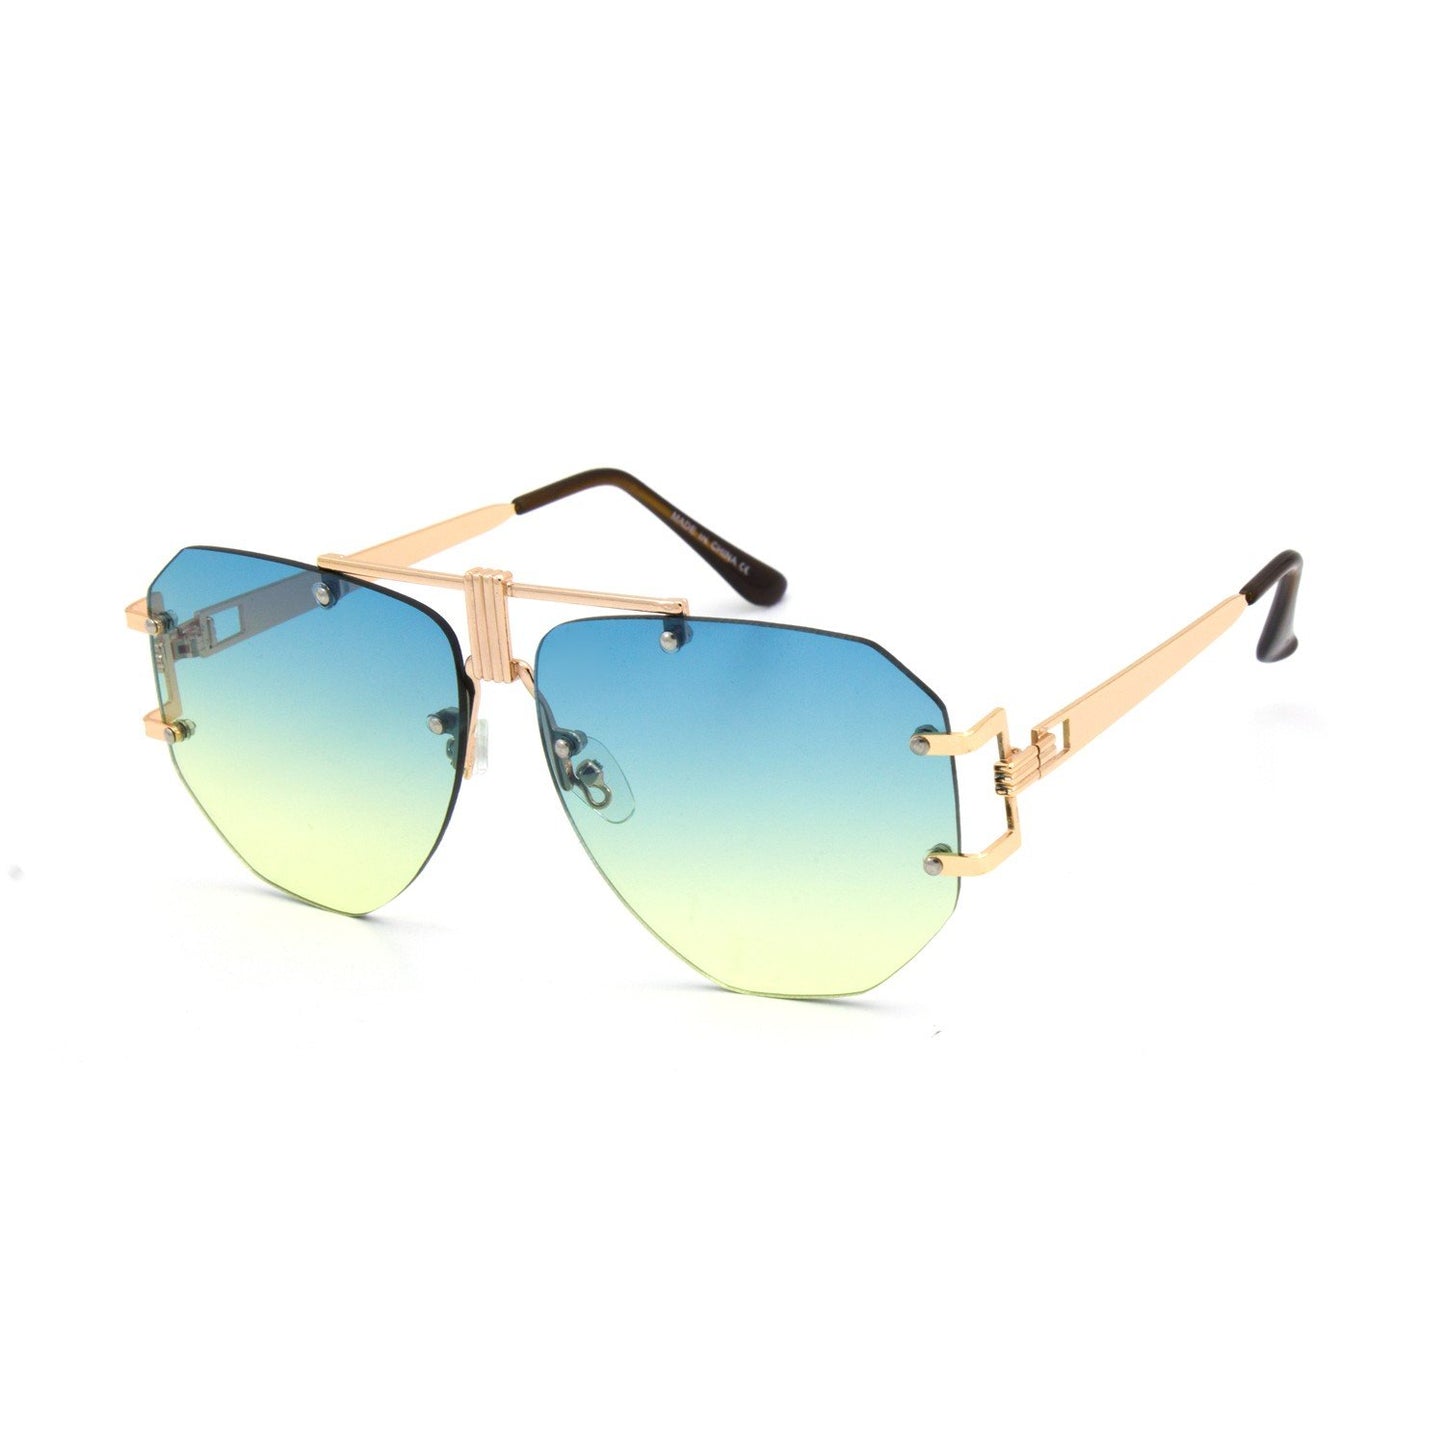 "Fancy Huh" Aviator Shade - Weekend Shade Sunglasses